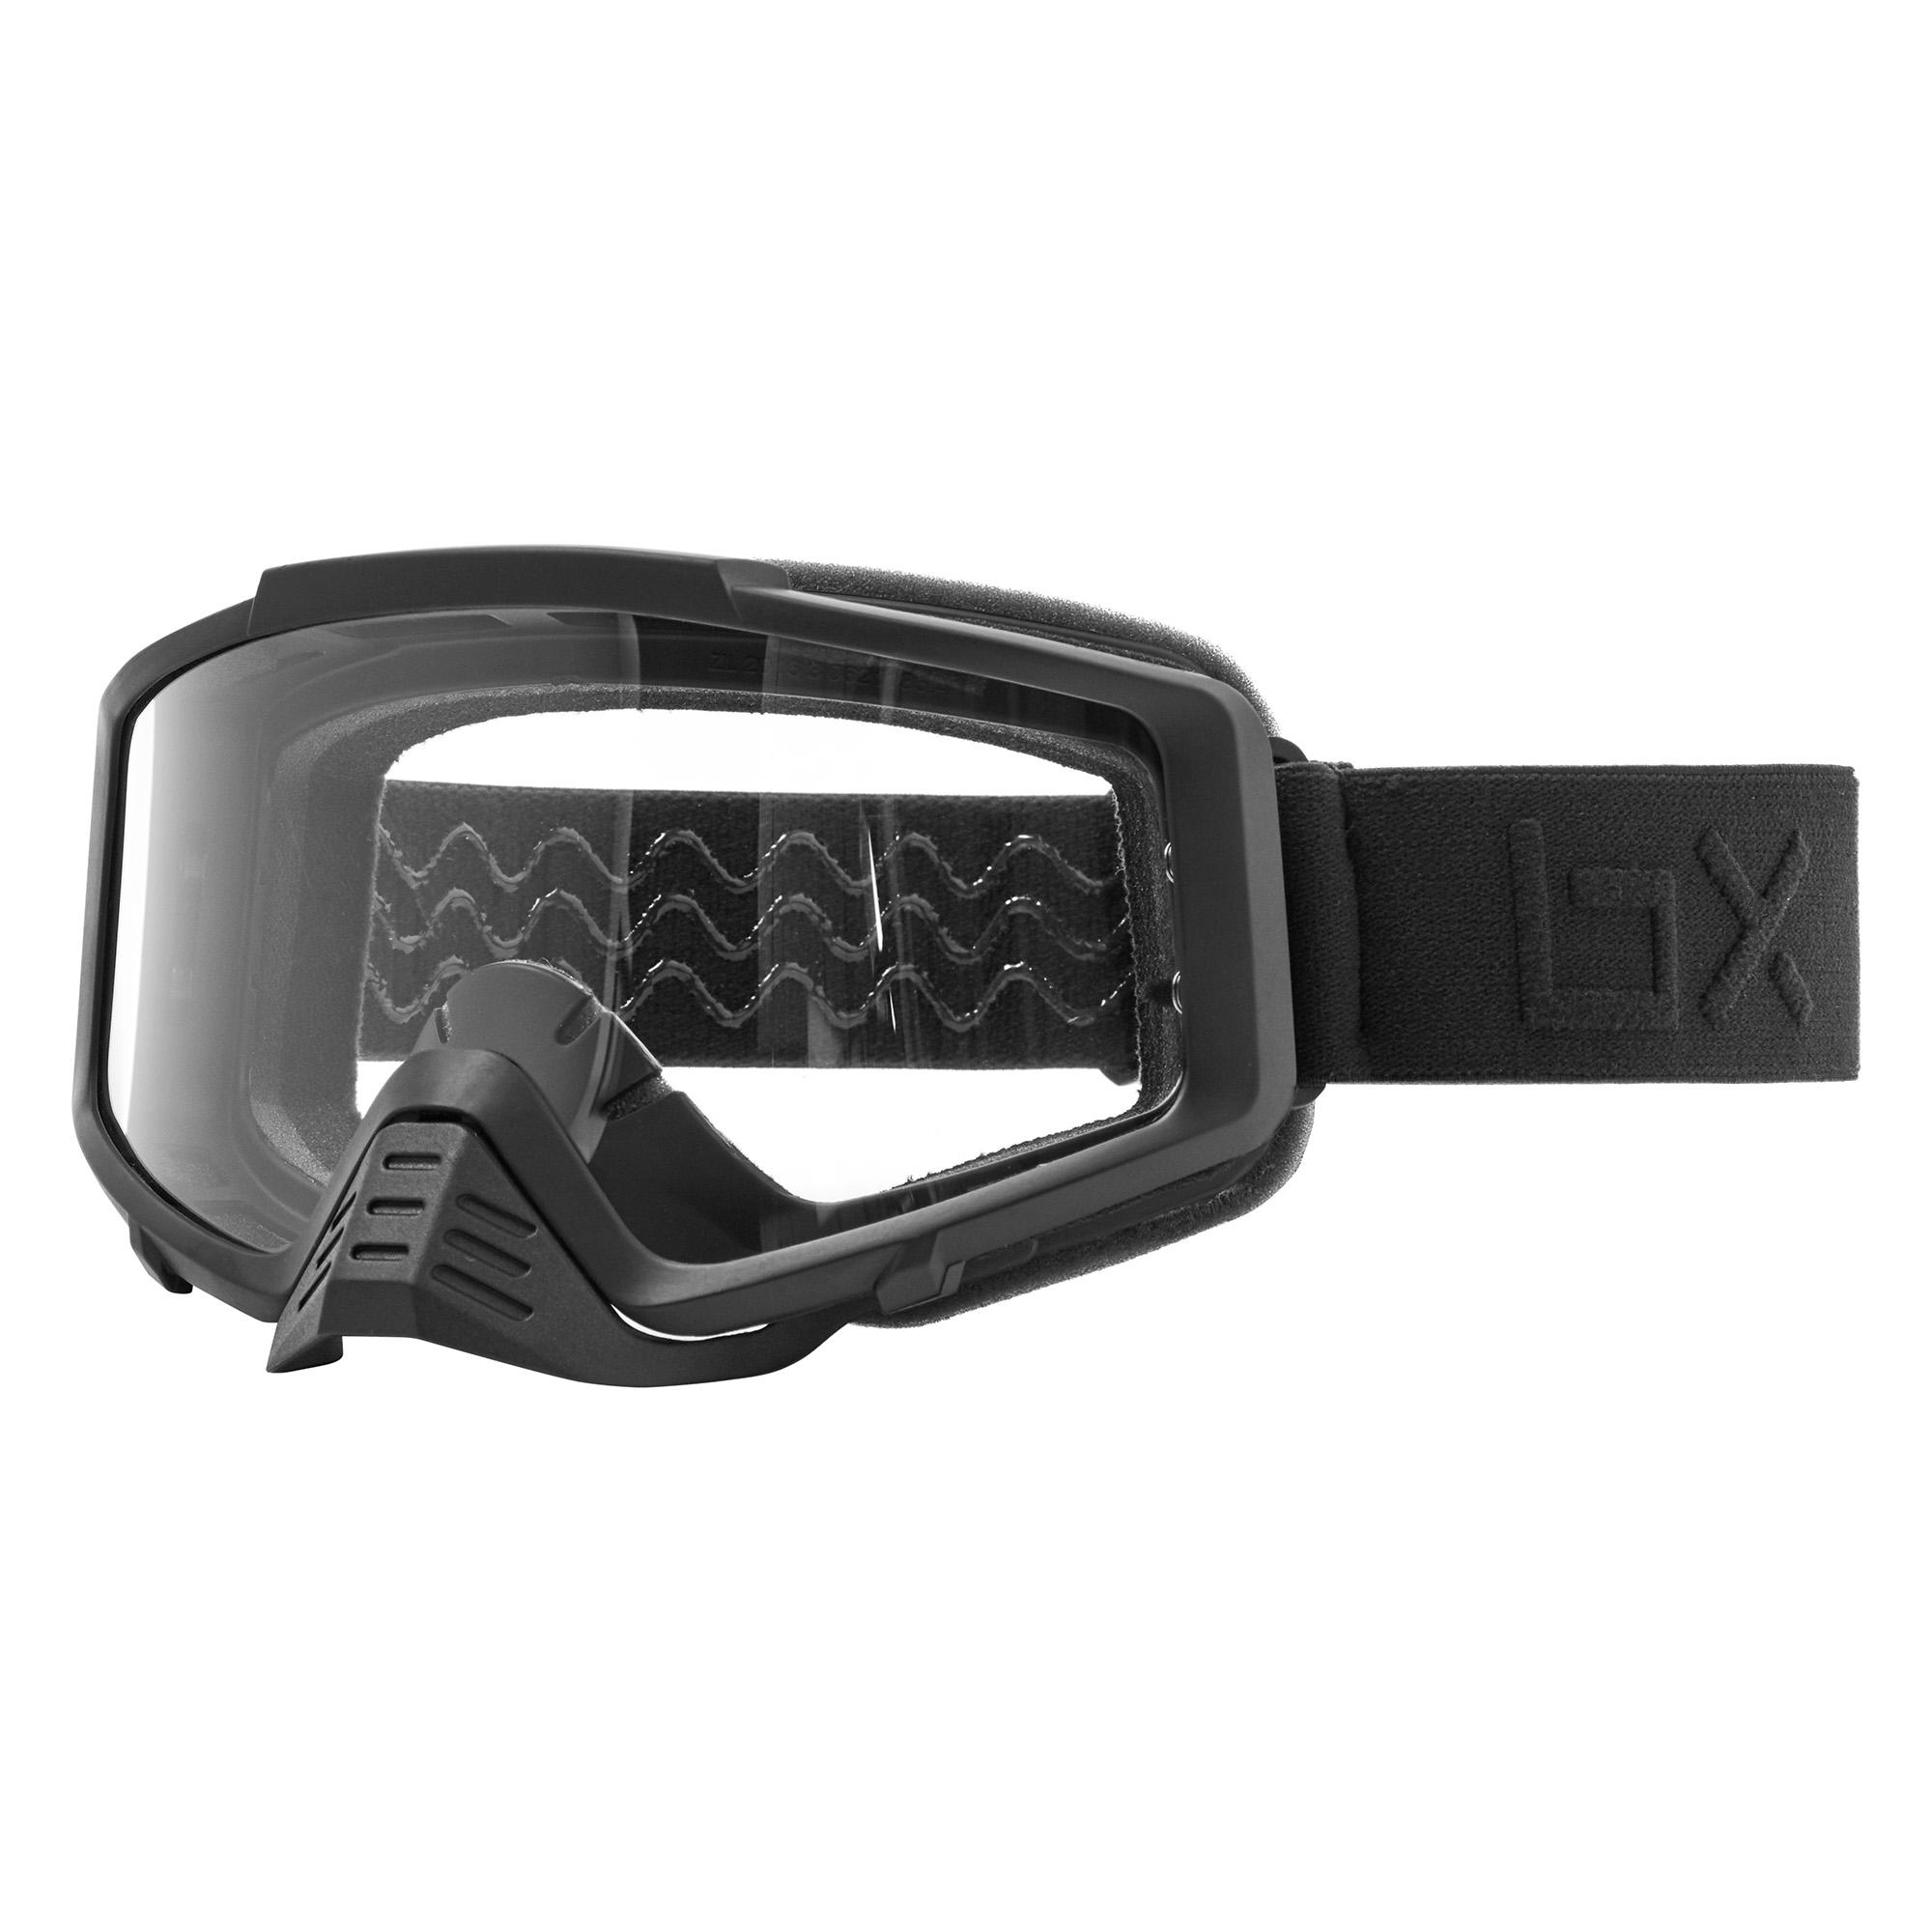 Brand-x G-1 Goggles - Black